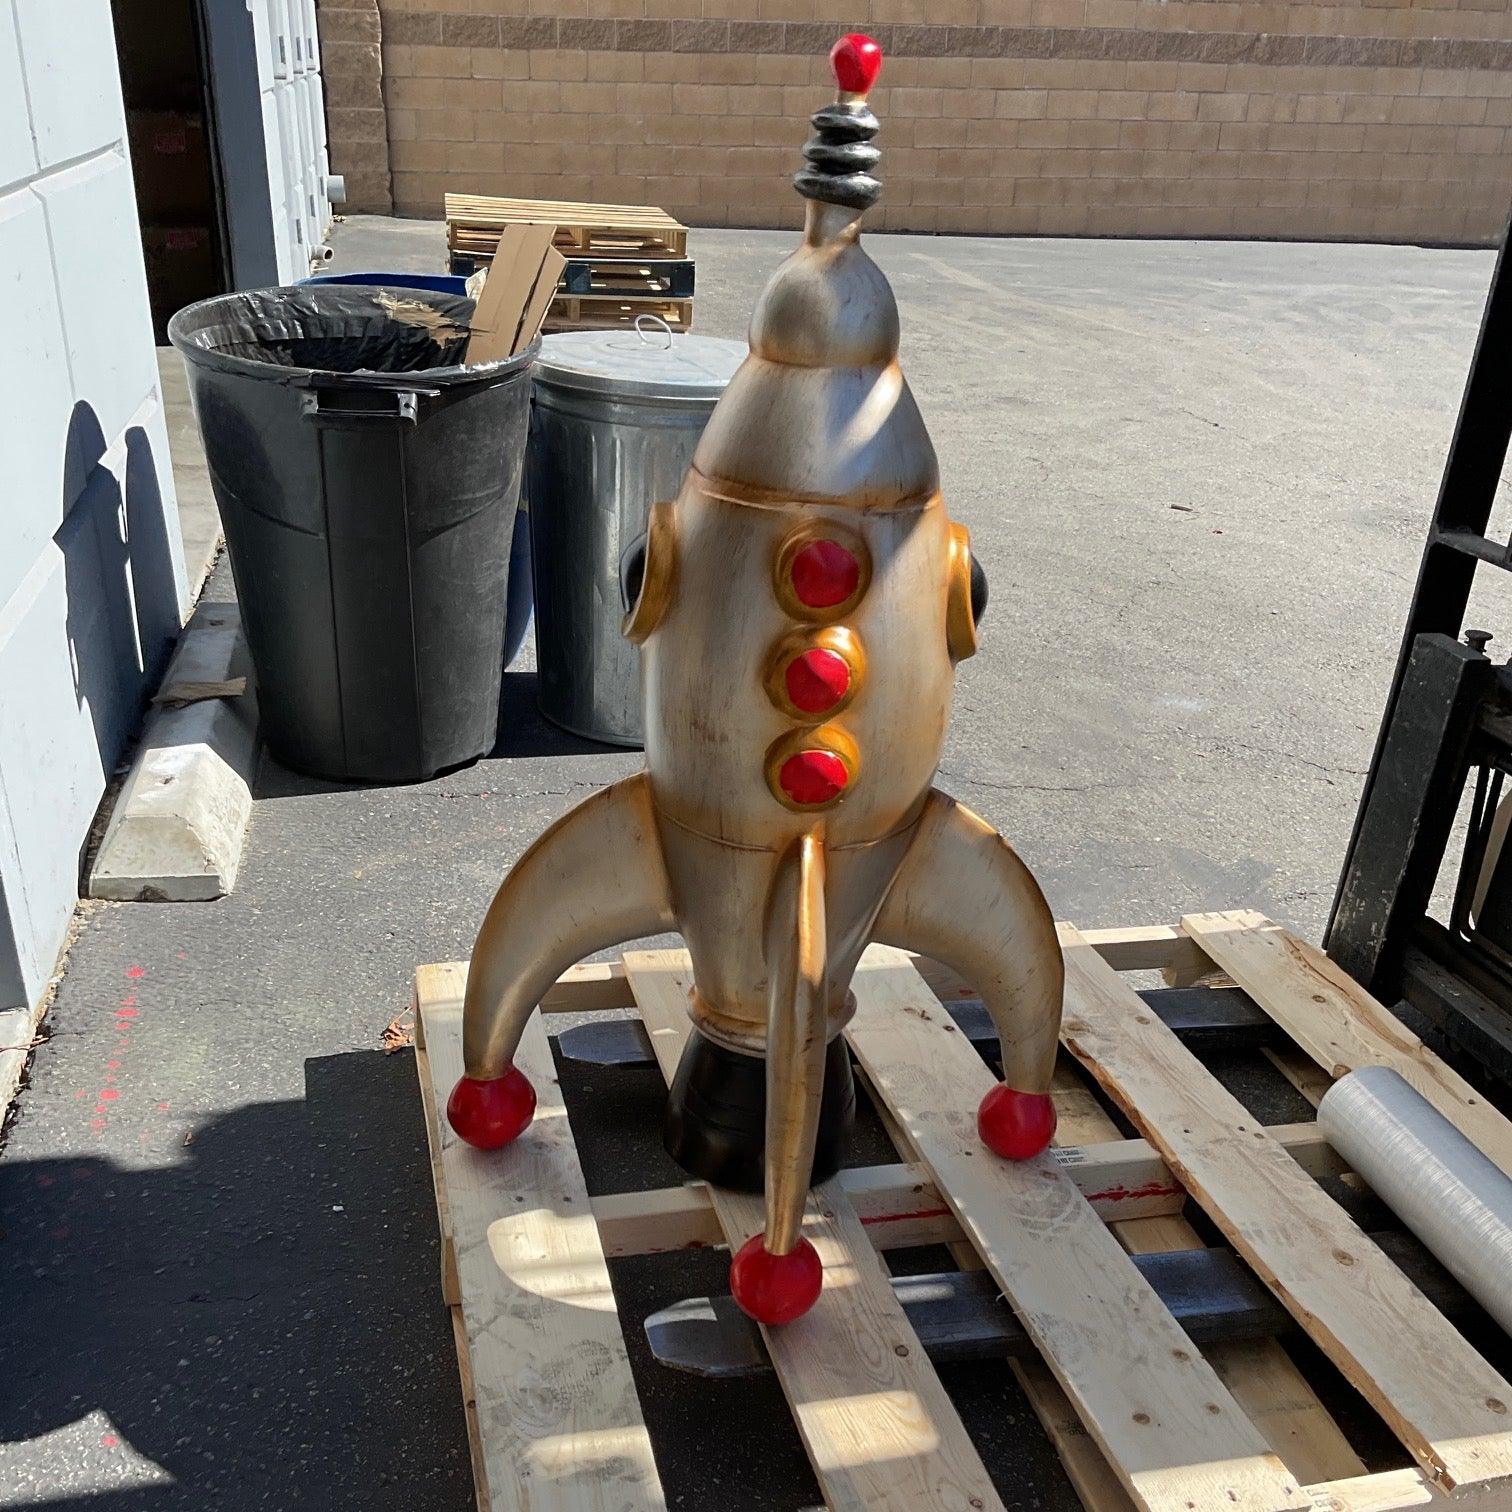 Toy Rocket Over Sized Statue - LM Treasures Prop Rentals 